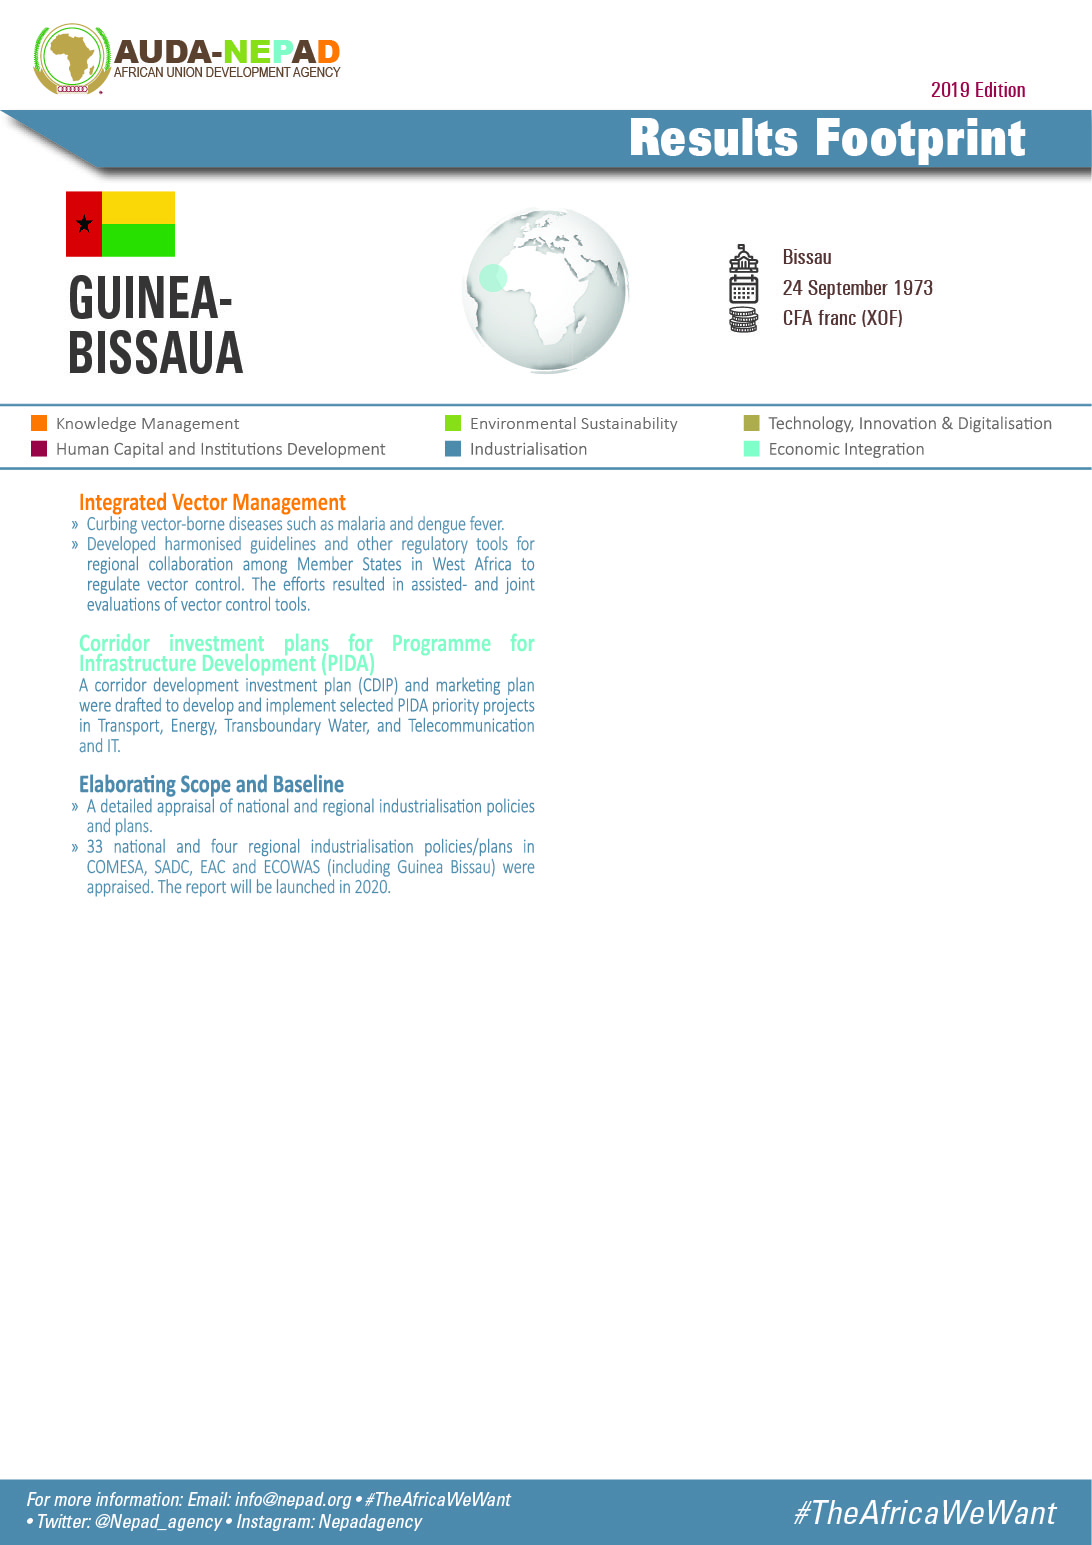 2019 AUDA-NEPAD Footprint: Country Profiles: Guinea-Bissau